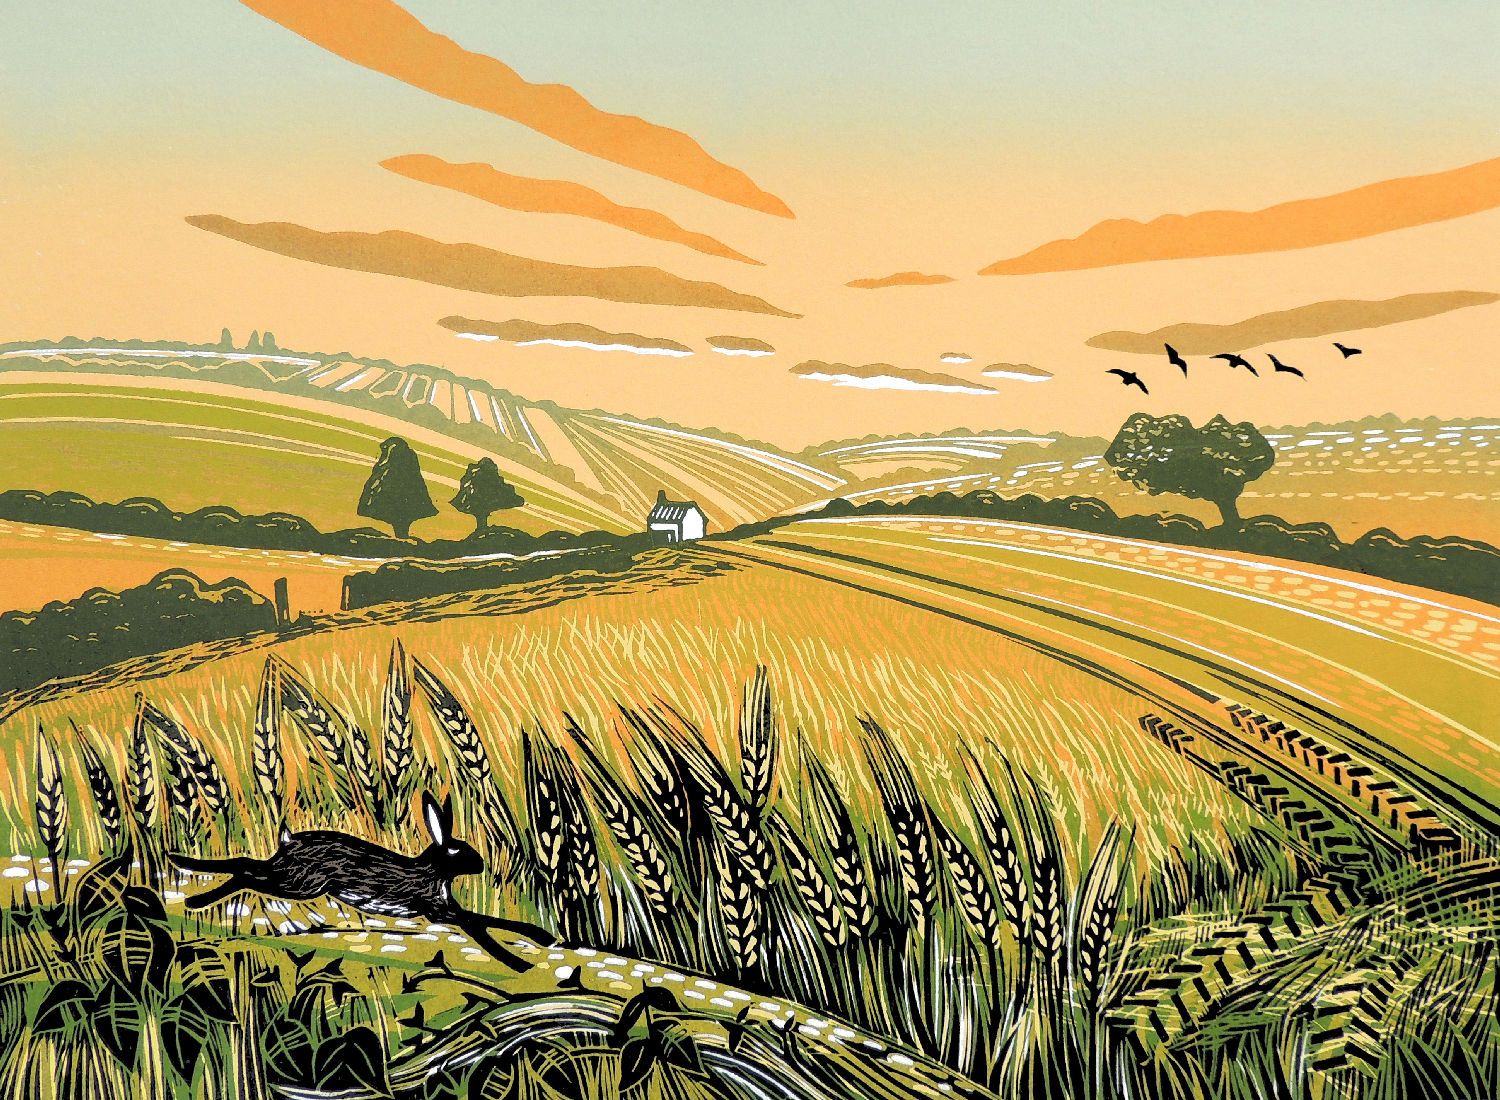 Running Through The Barley by Rob Barnes